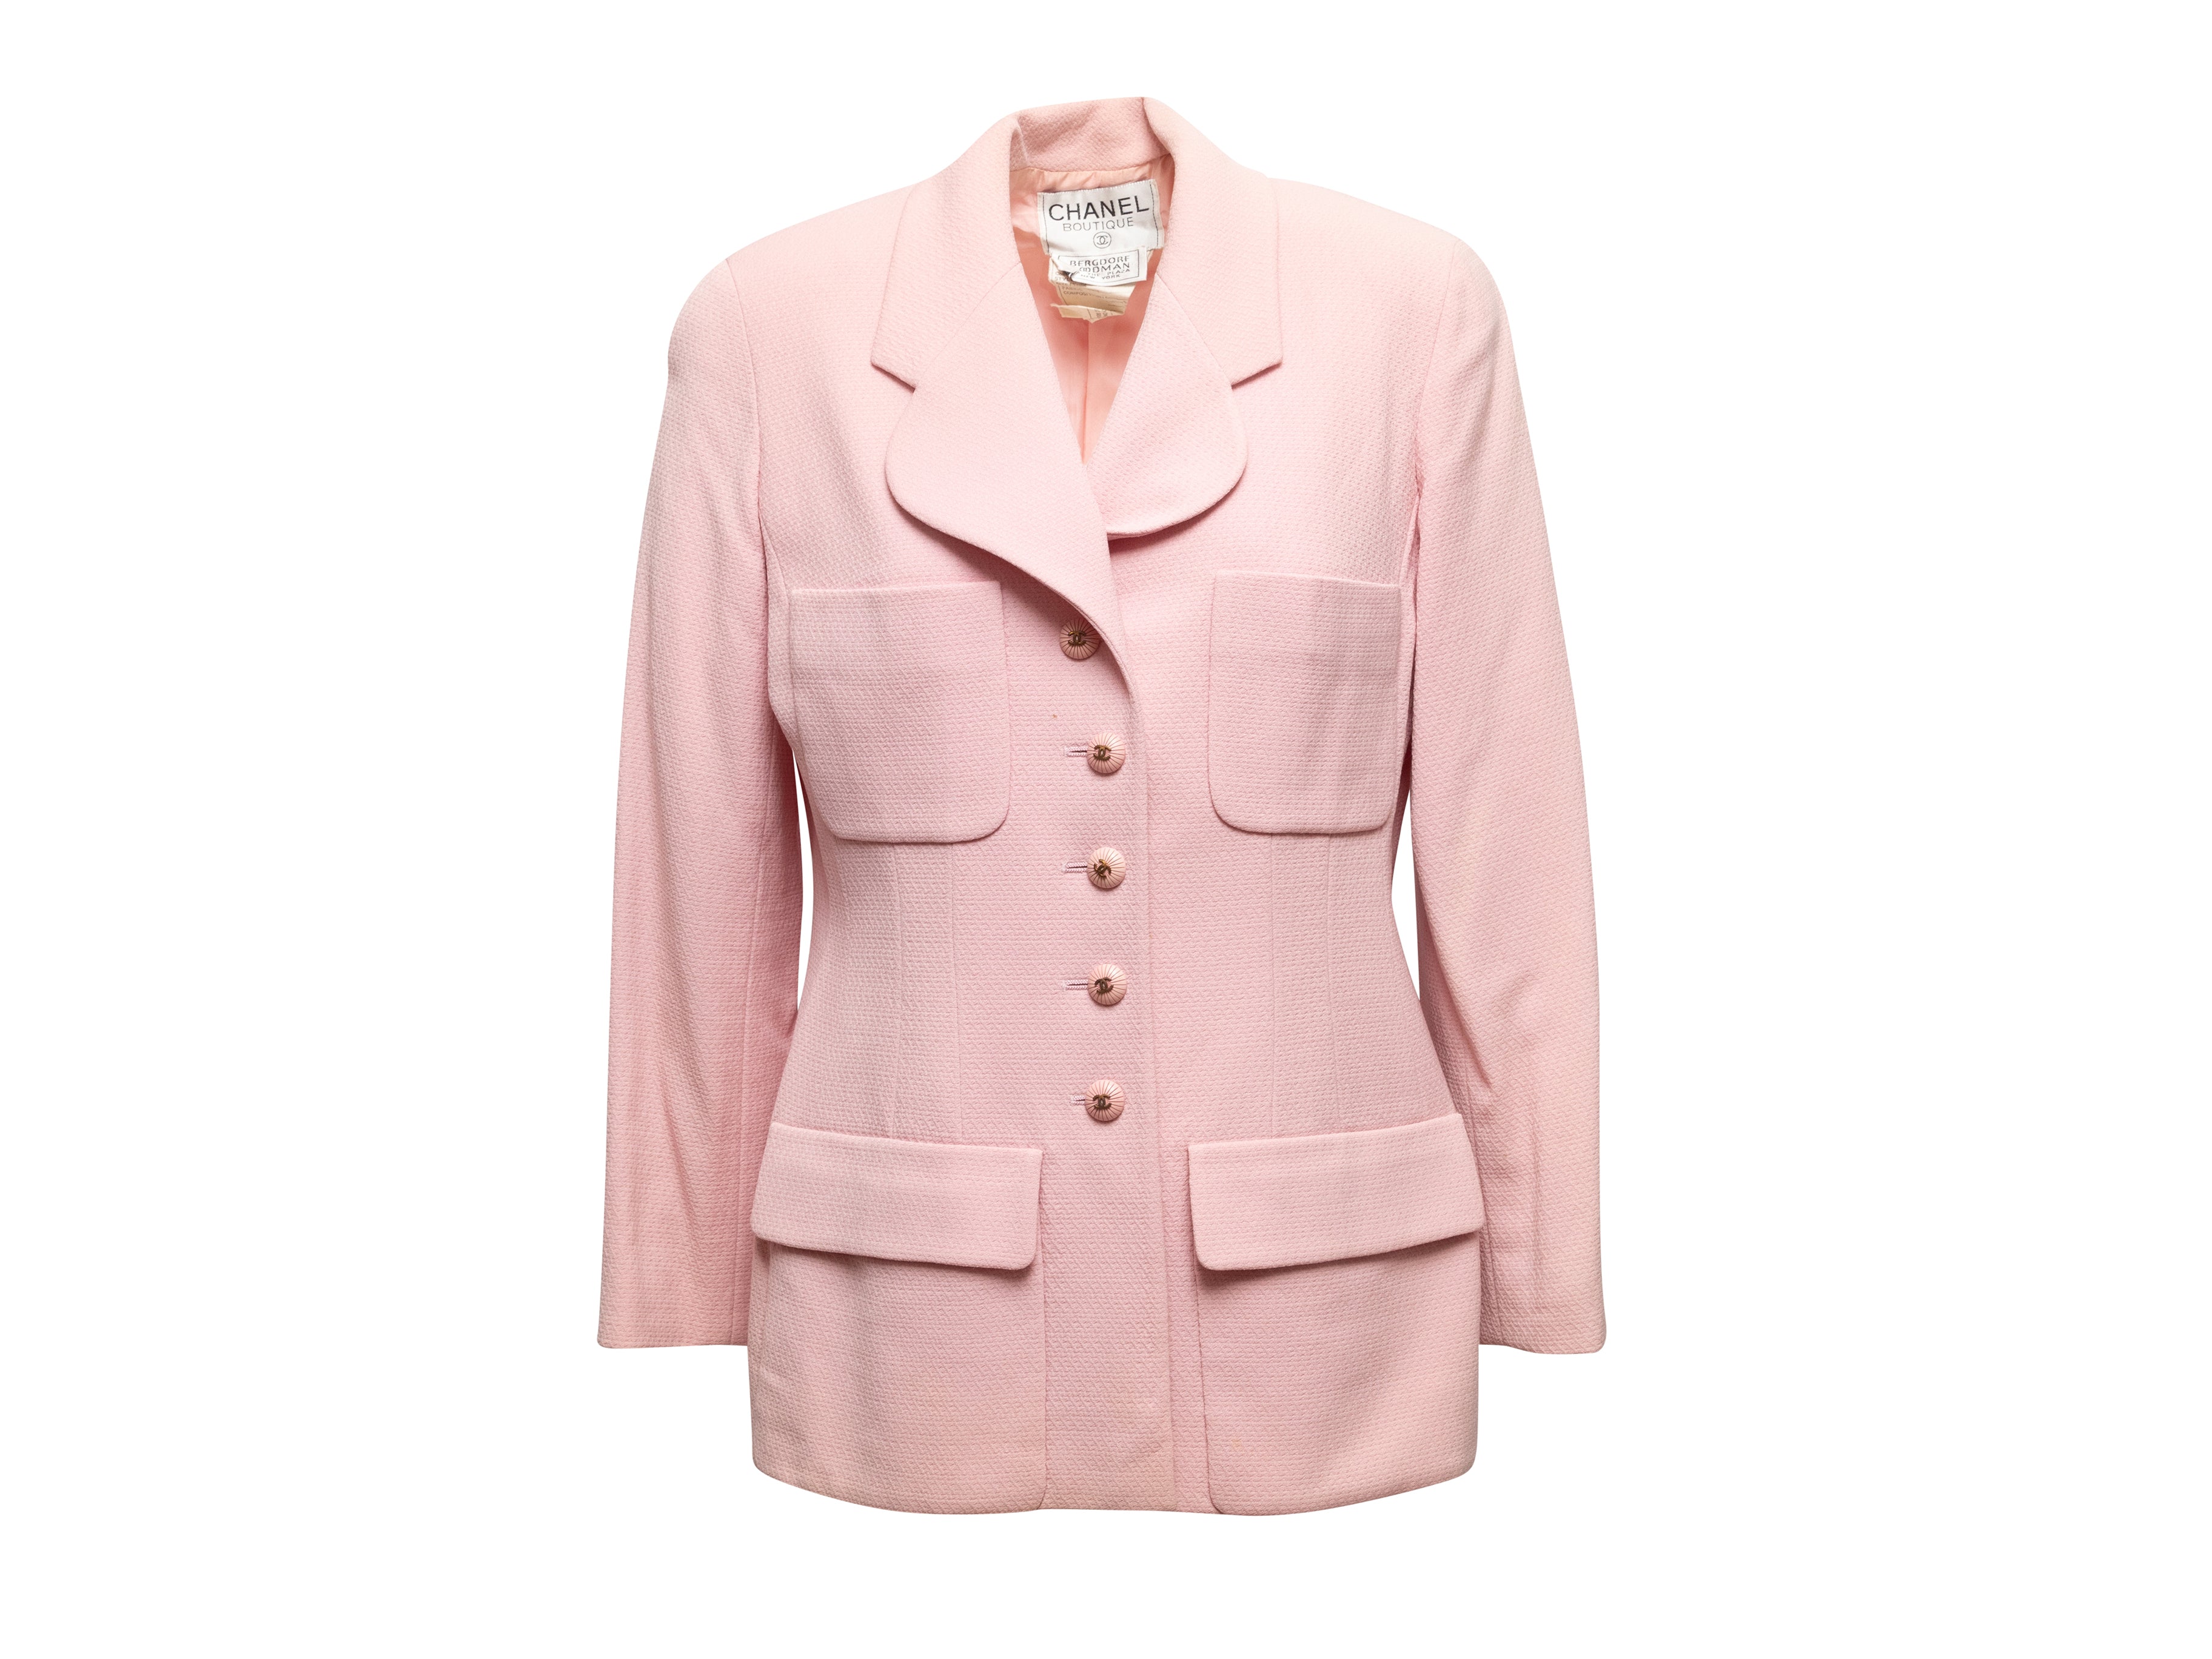 Chanel Pink Tweed Jacket Blazer Size 10 M  Chanel Cardigan  Ideas of  Chanel Cardigan chanel cardigan   Pink tweed jacket Tweed jacket  Chanel tweed jacket